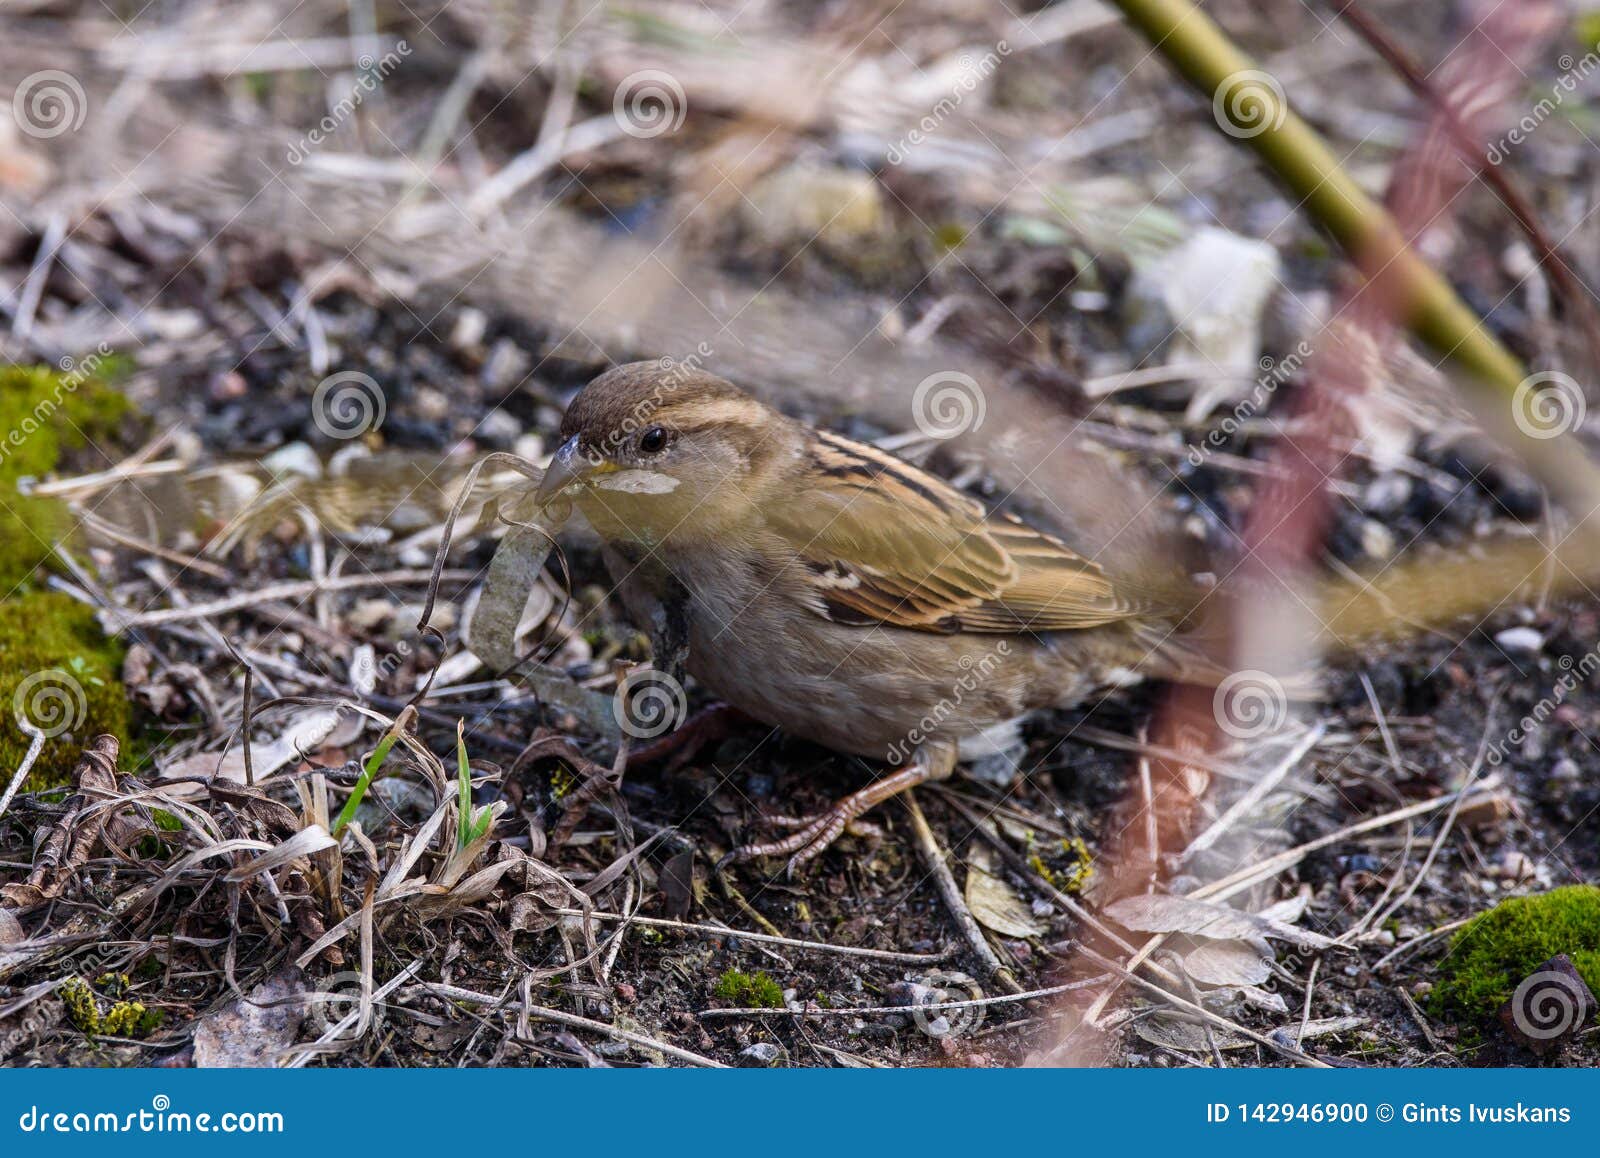 house sparrow female bird passer domesticus with plastic lente at her beak